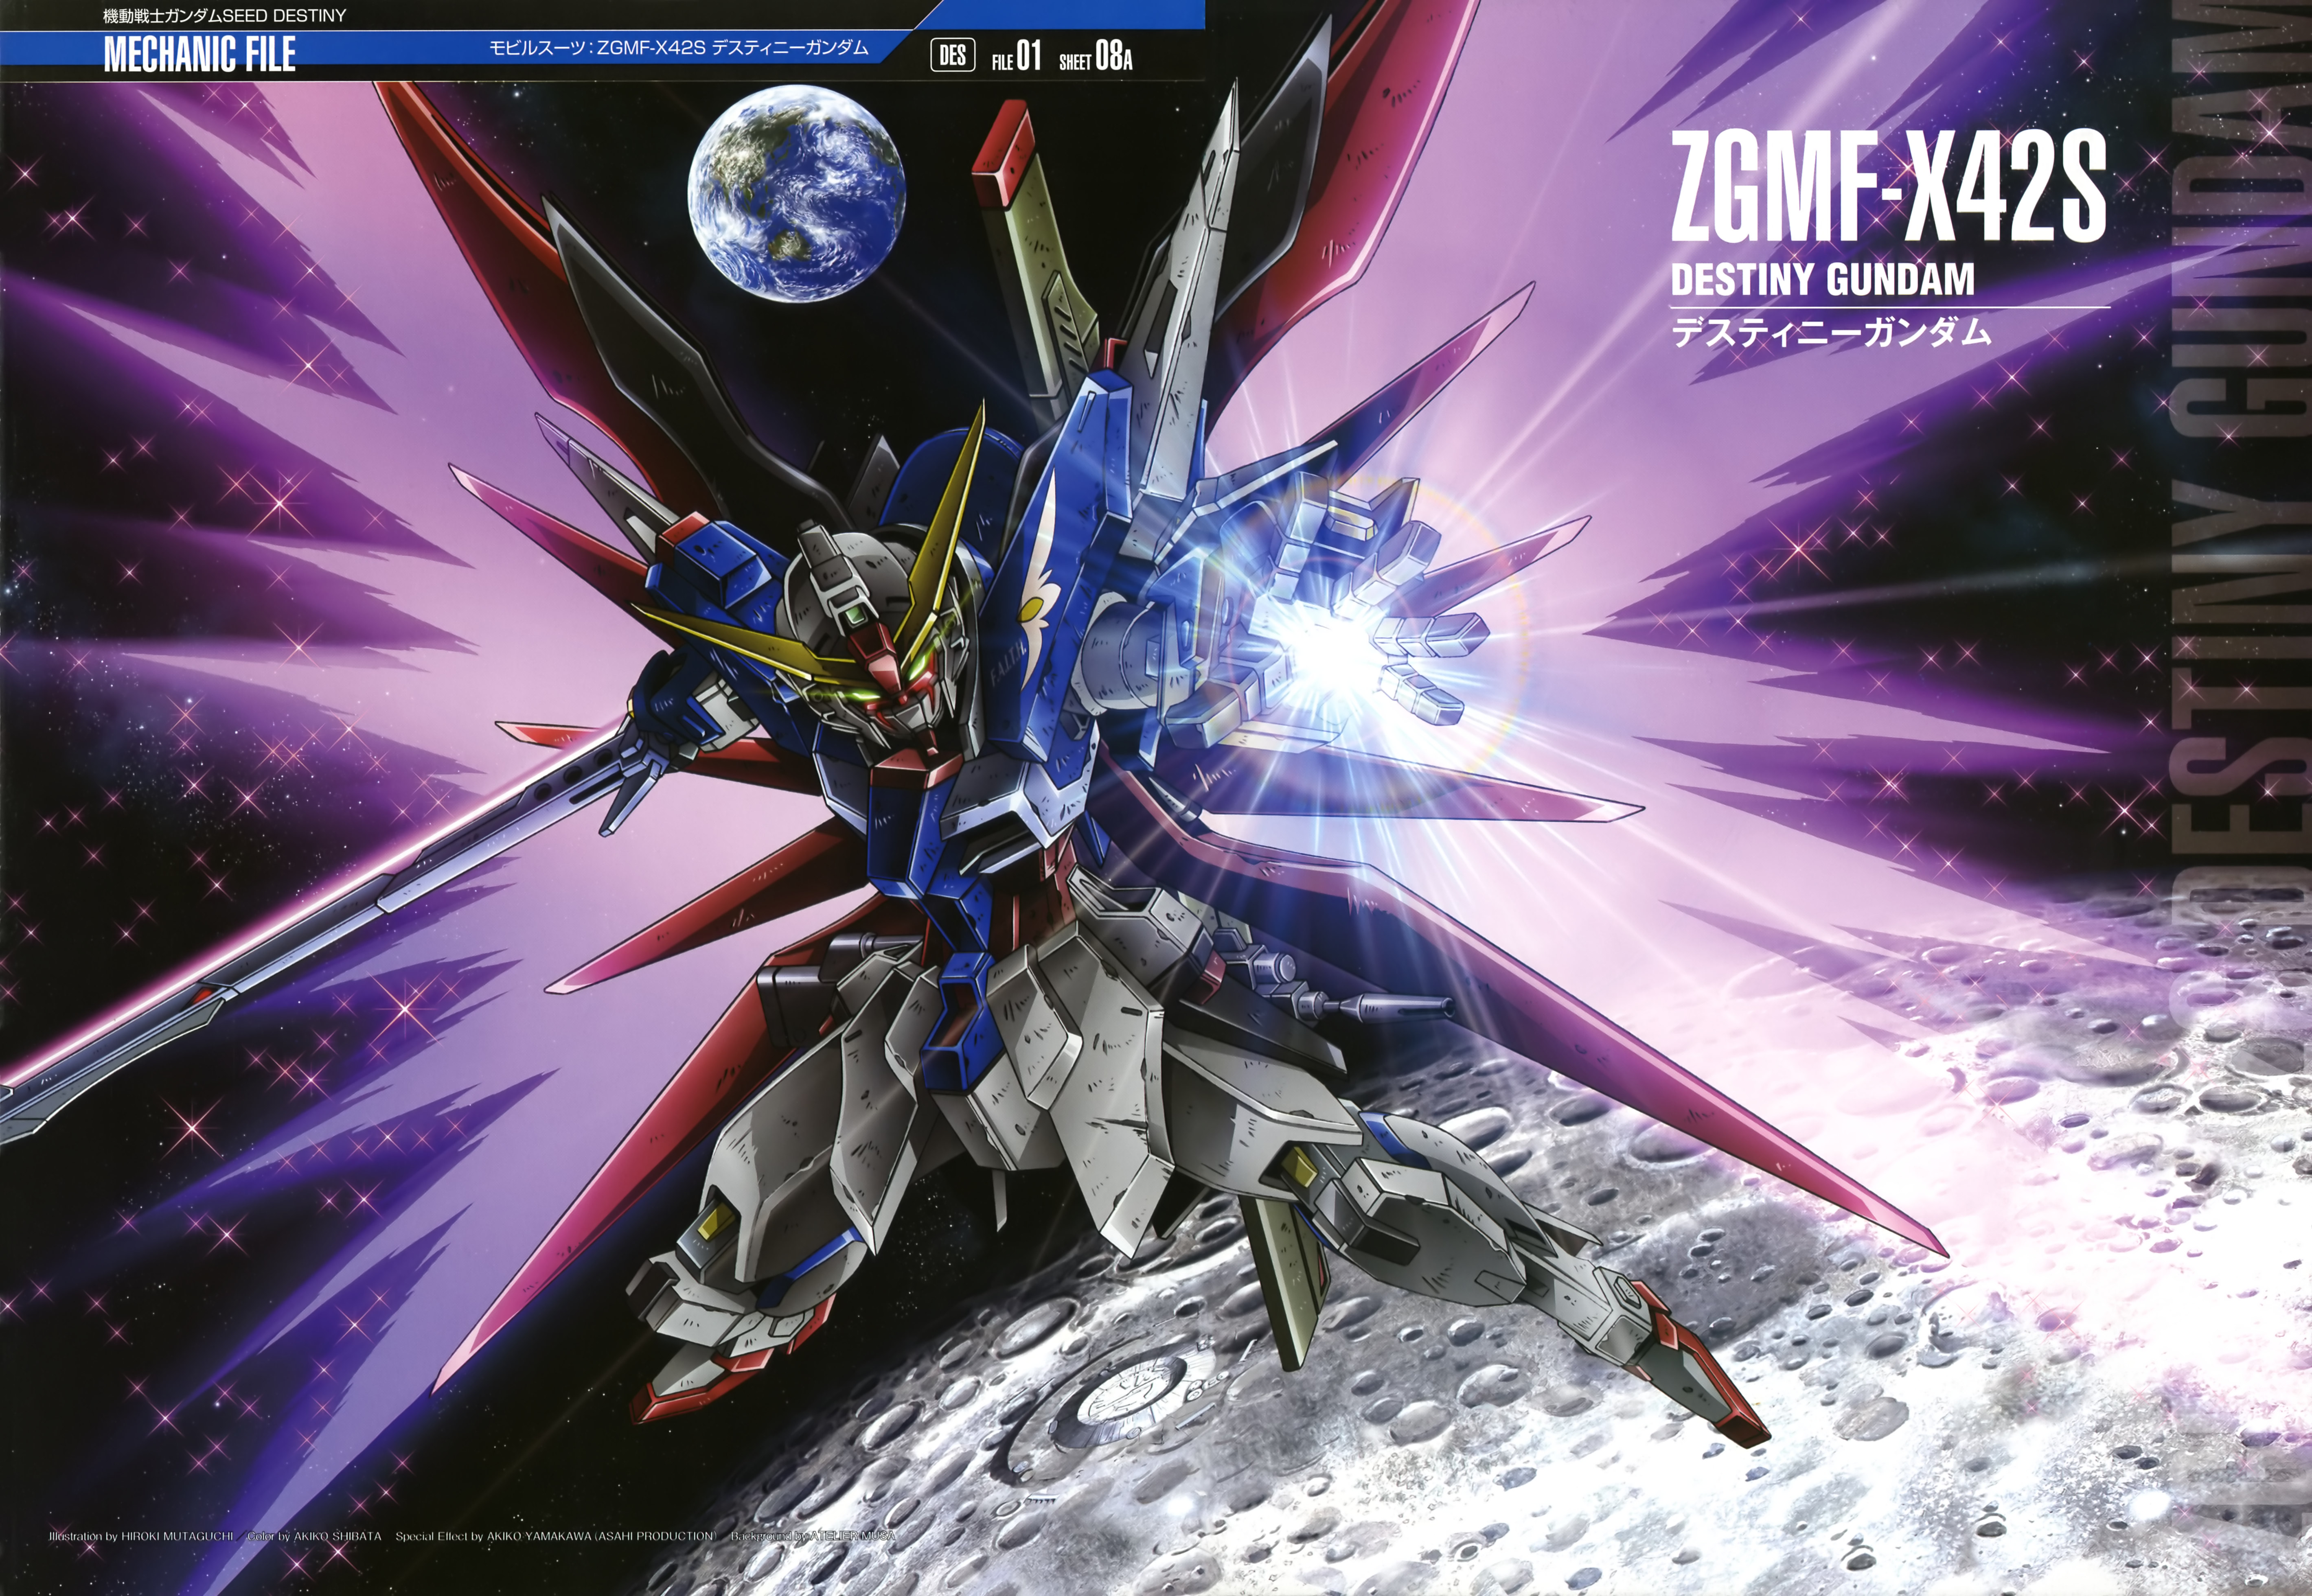 Super Robot Taisen Destiny Gundam Gundam Mobile Suit Gundam SEED Destiny Anime Mechs Artwork Digital 5679x3921